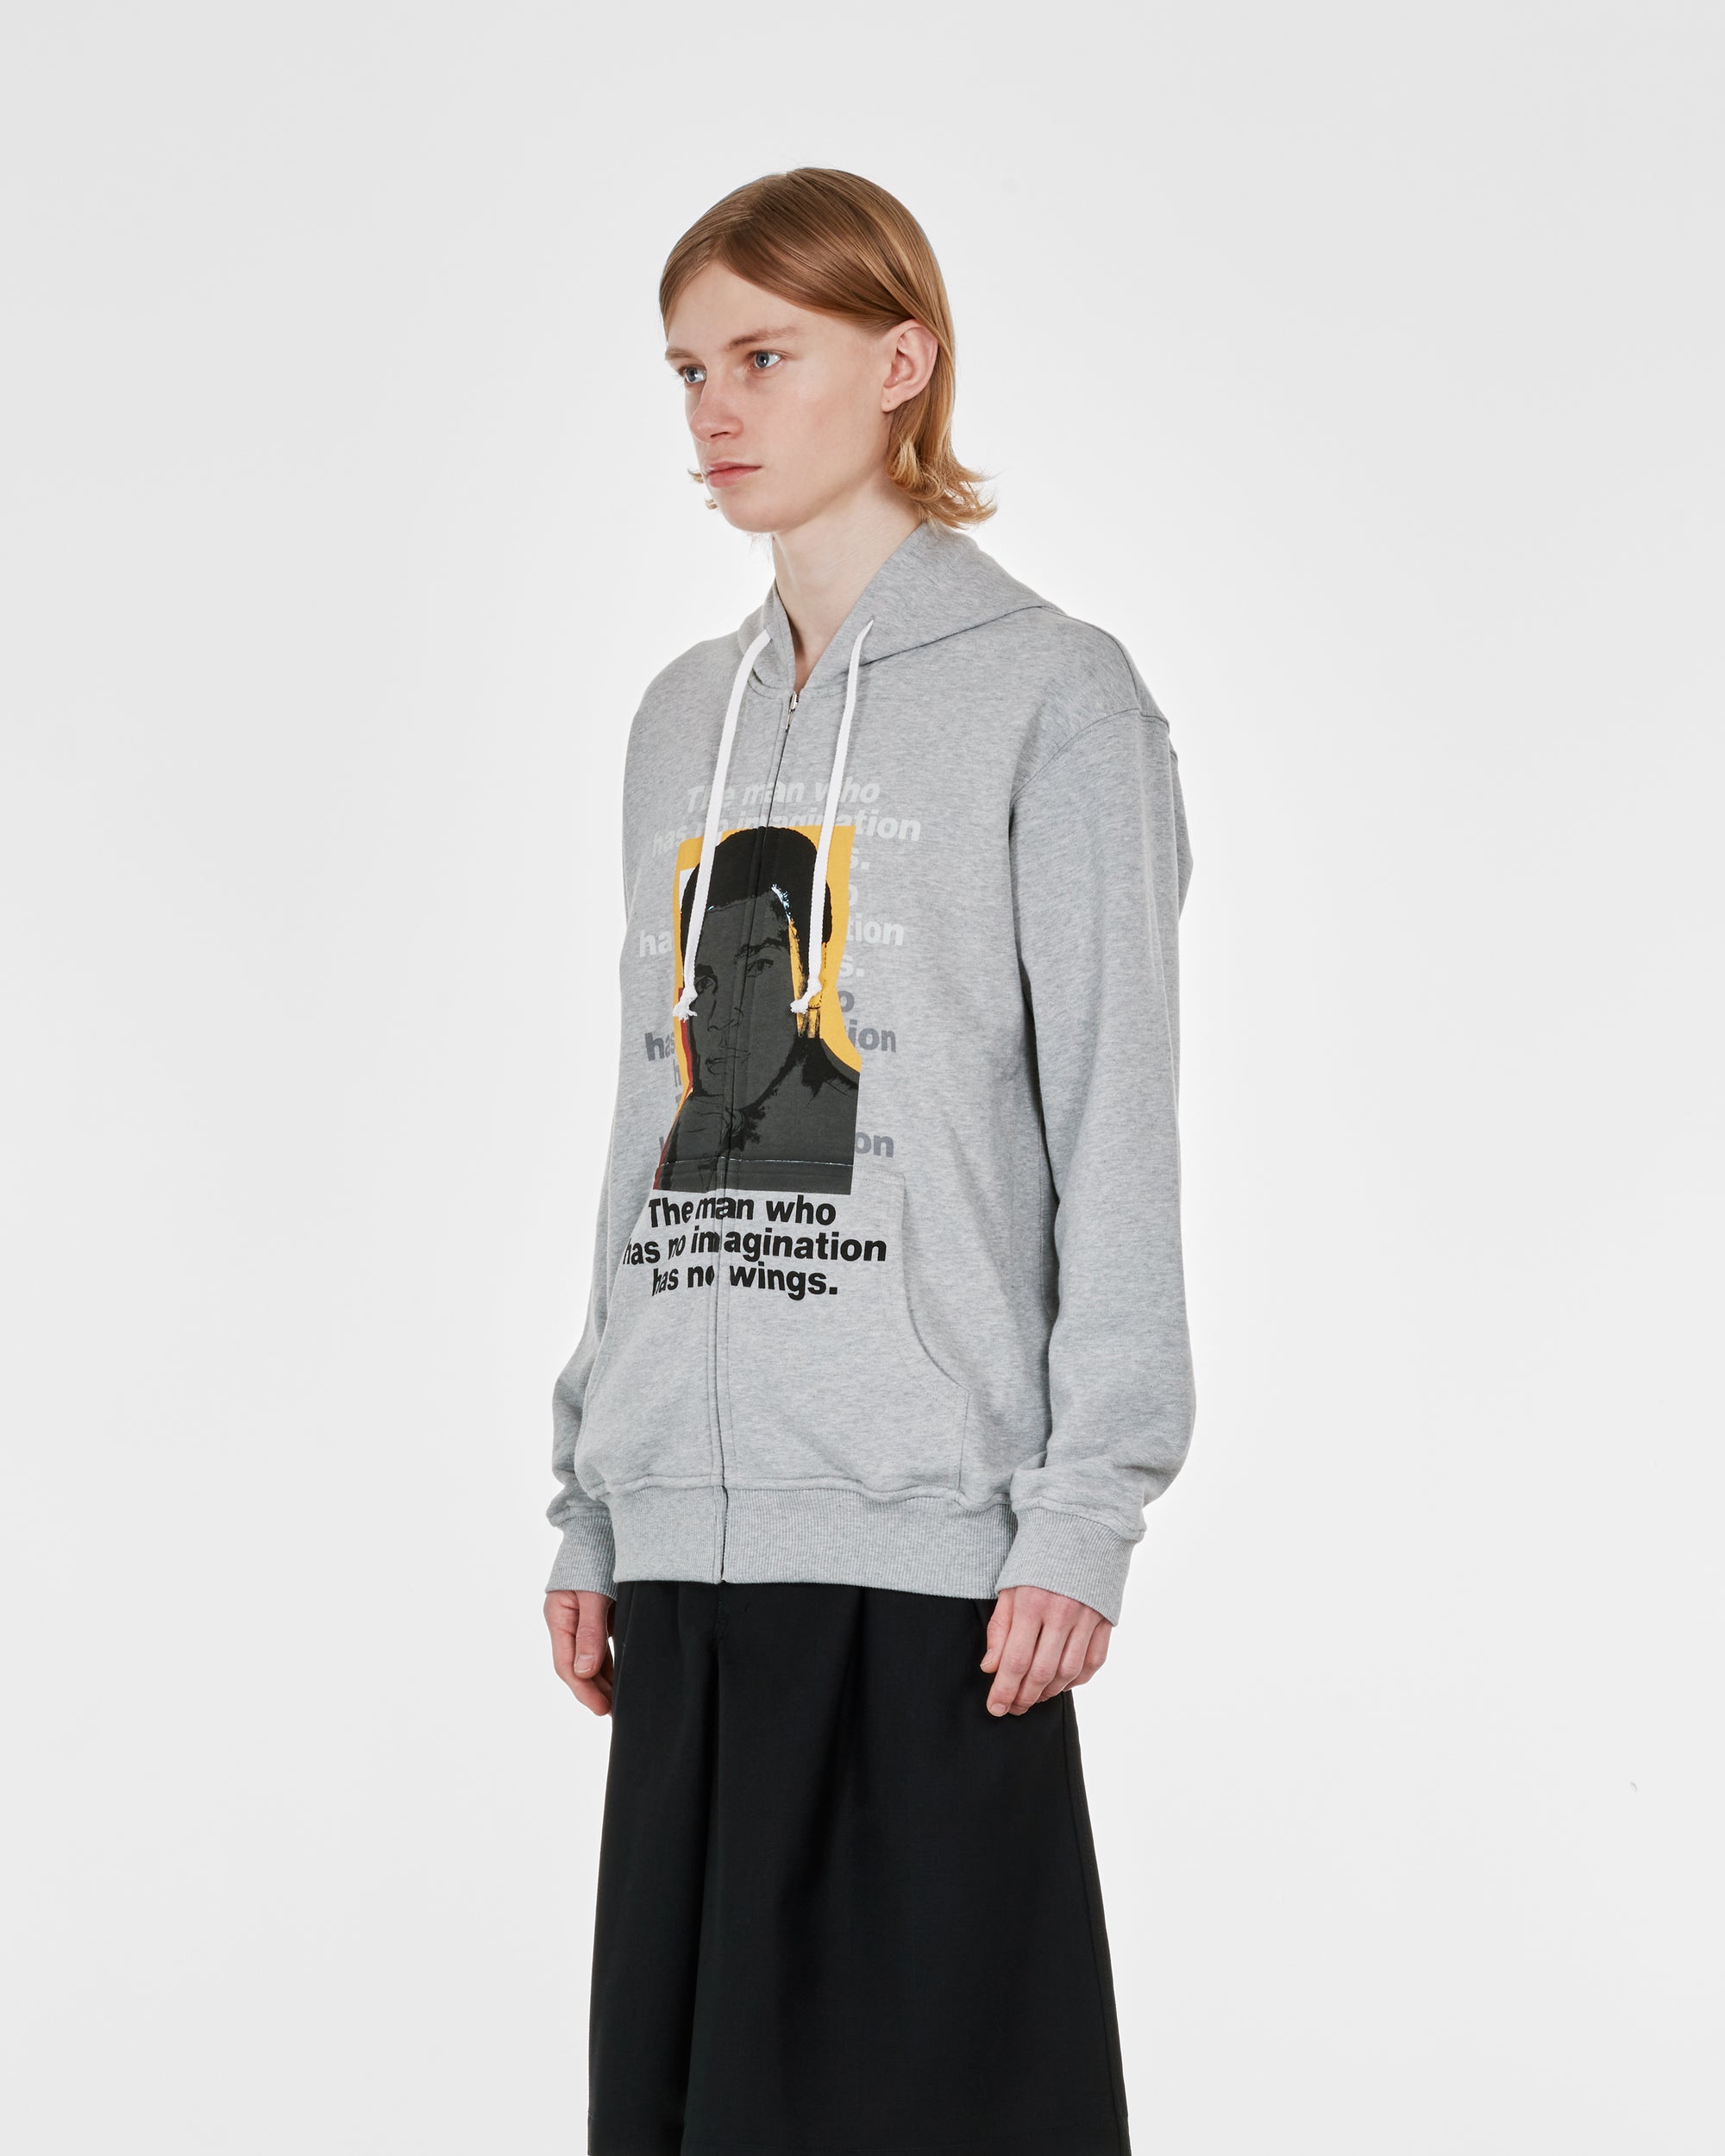 CDG Shirt - Andy Warhol Men's Hooded Sweatshirt (Grey/Print H) view 3